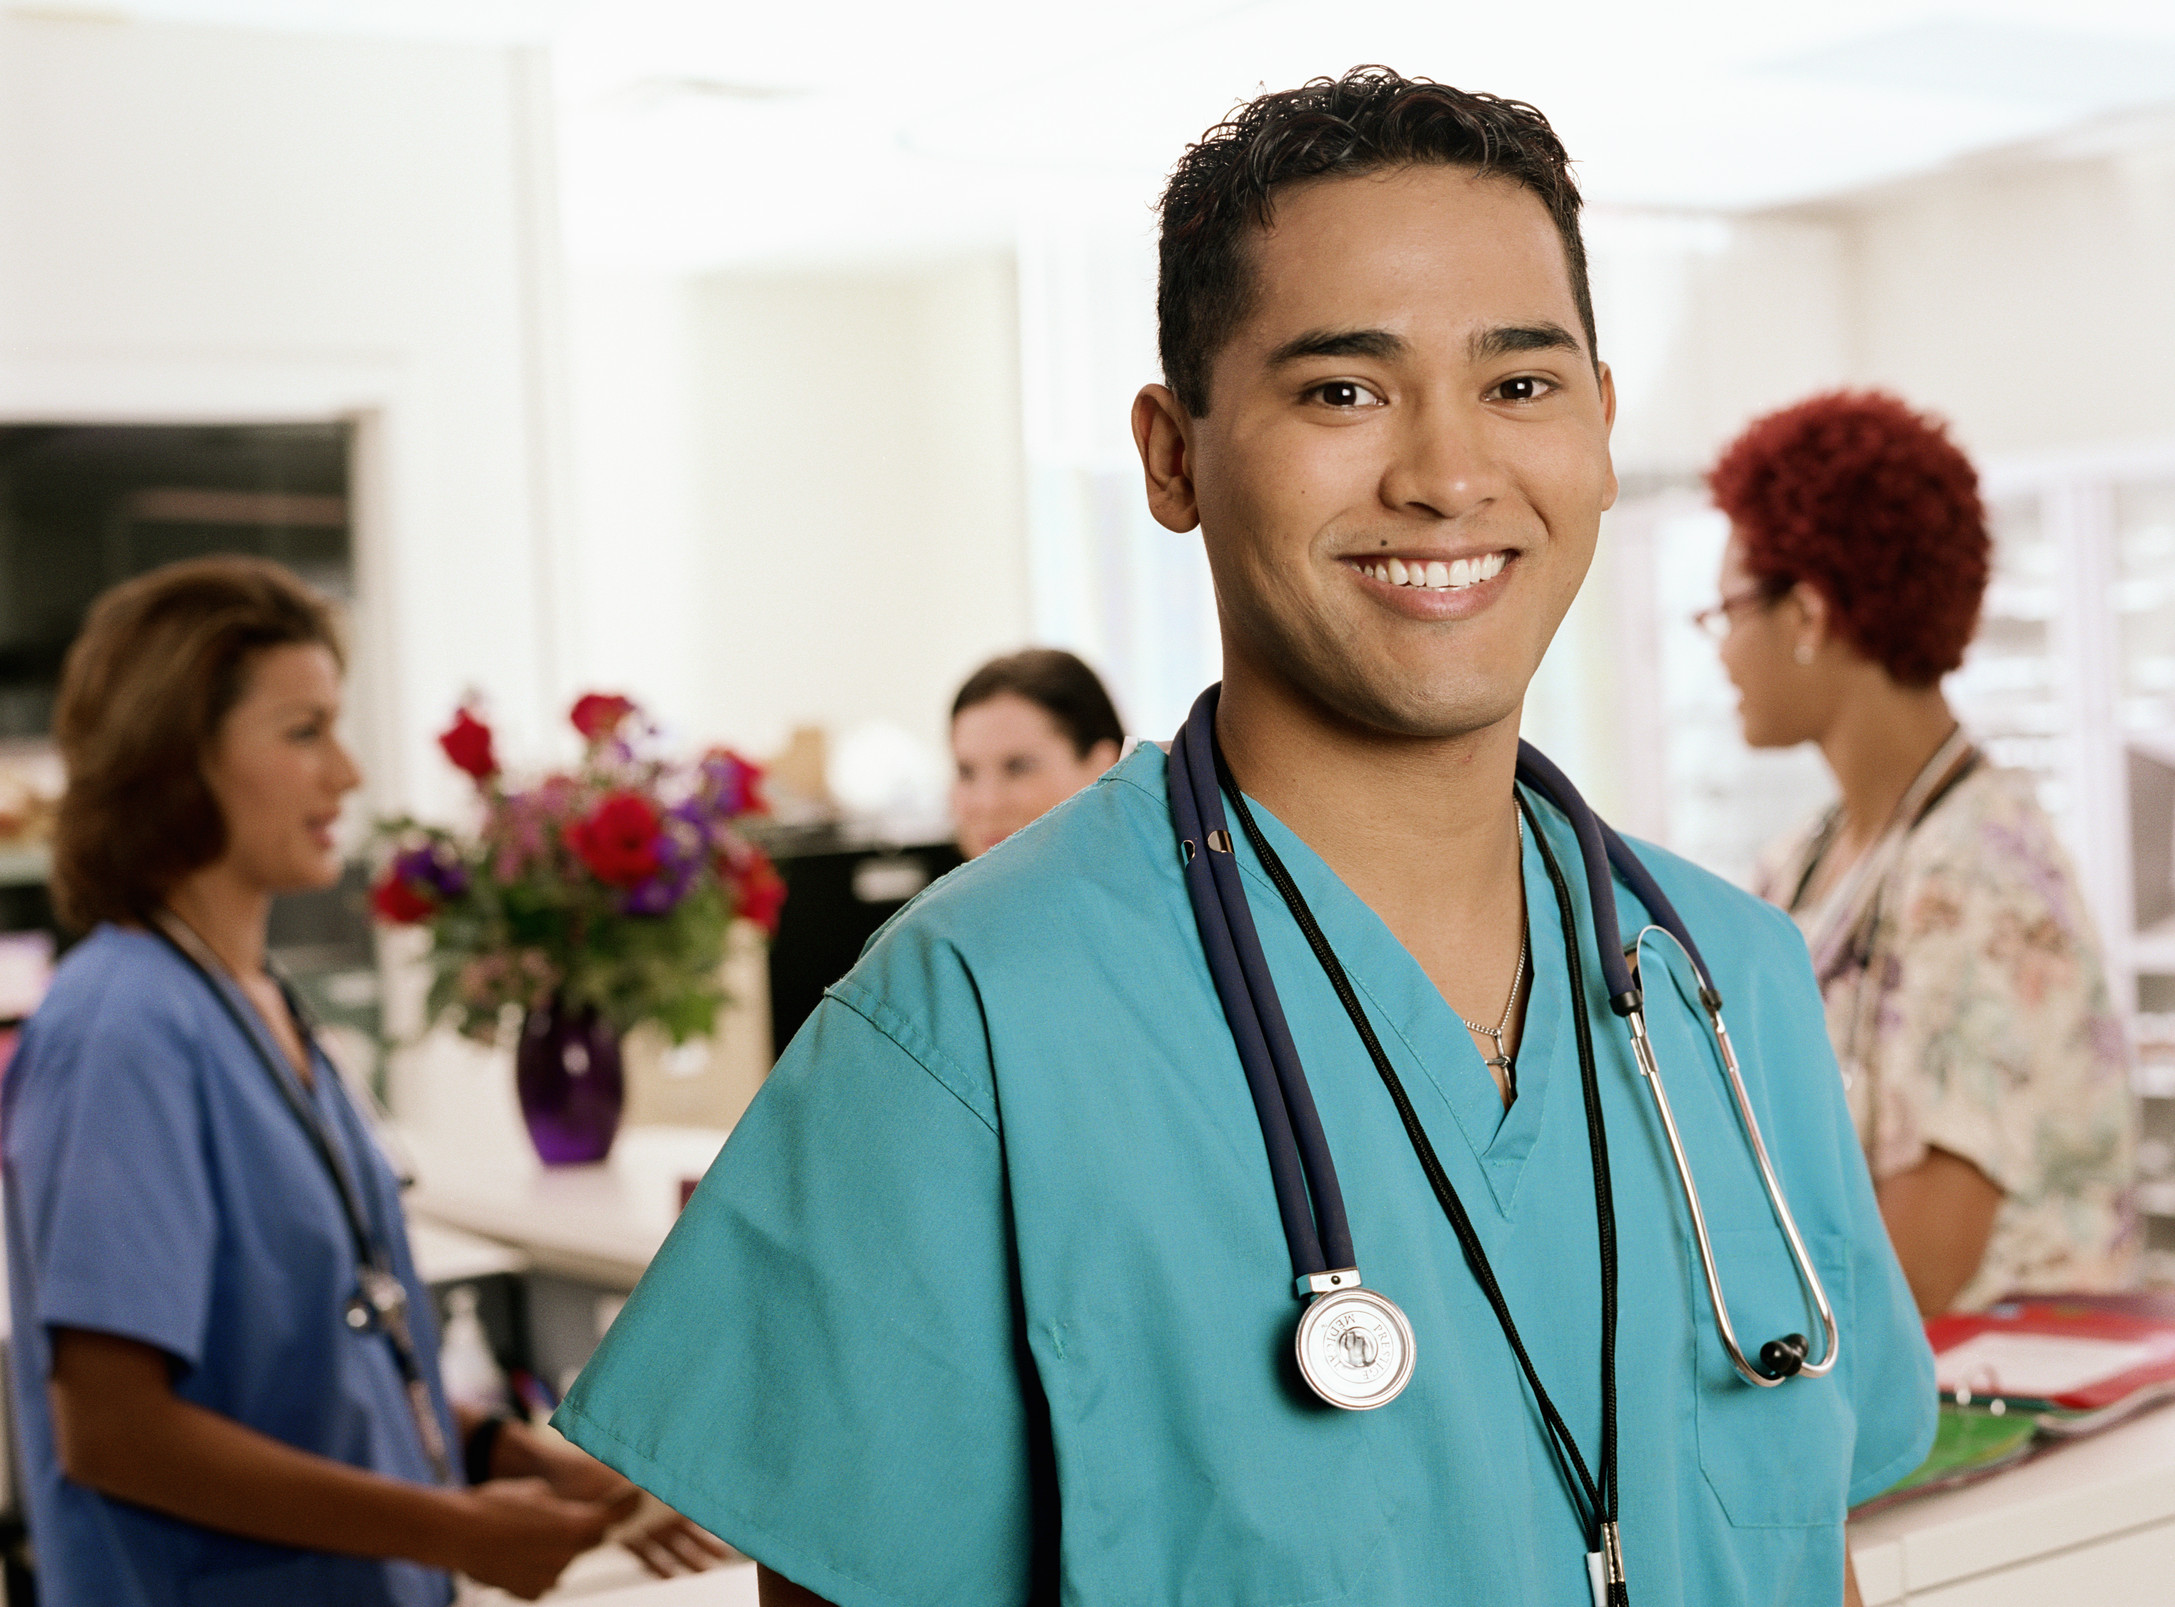 Is Nursing Is Good Career Choice For Men